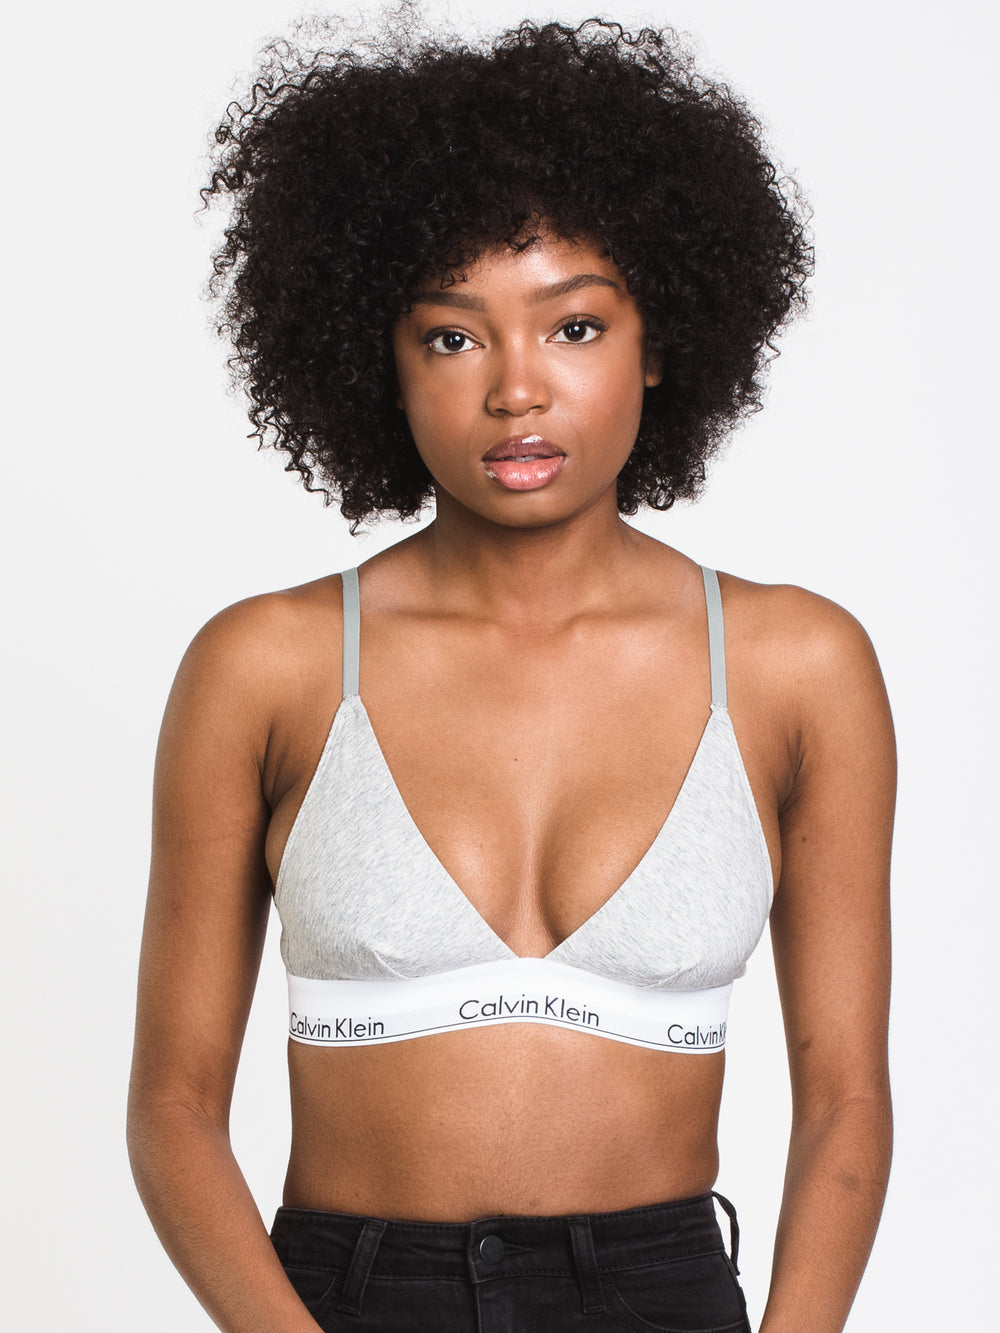 Buy Calvin Klein Modern Cotton Bralette Plus Size from £19.99 (Today) –  Best Deals on